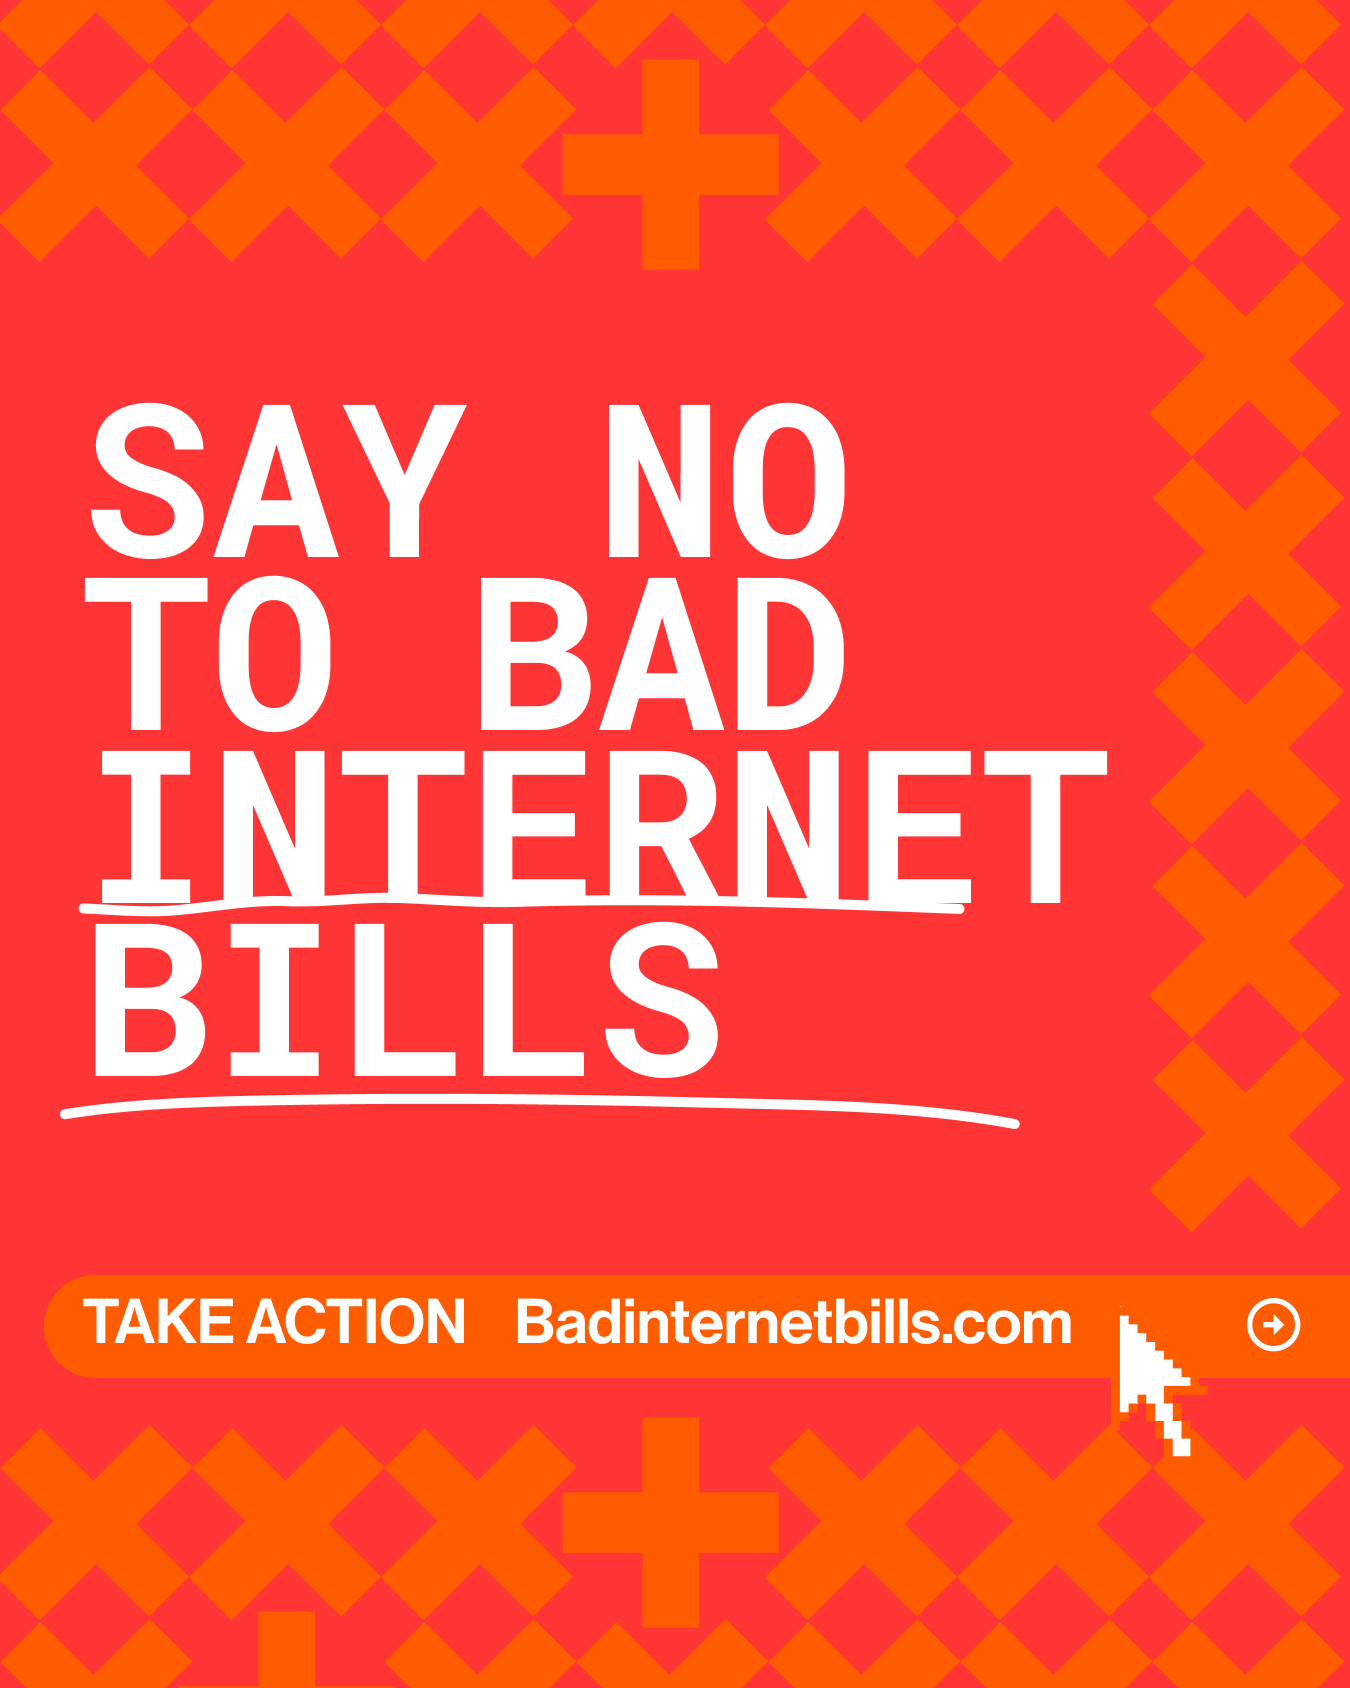 SAY NO TO BAD INTERNET BILLS. TAKE ACTION: BadInternetBills.com